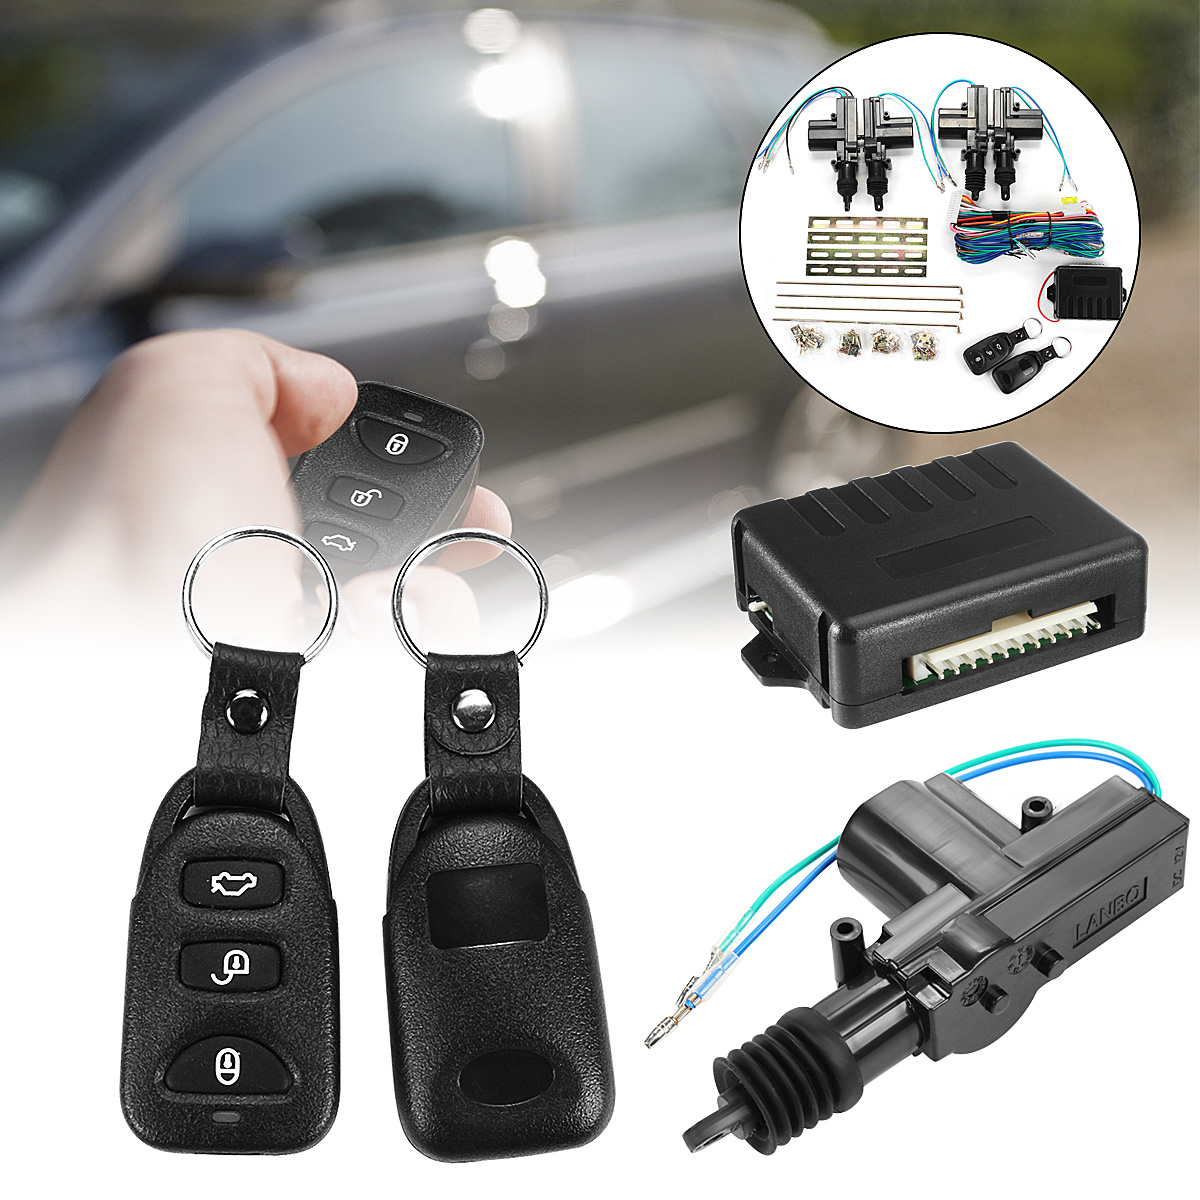 

Universal Auto Remote Car Central 4 Door Lock Unlock System Keyless Entry Kit